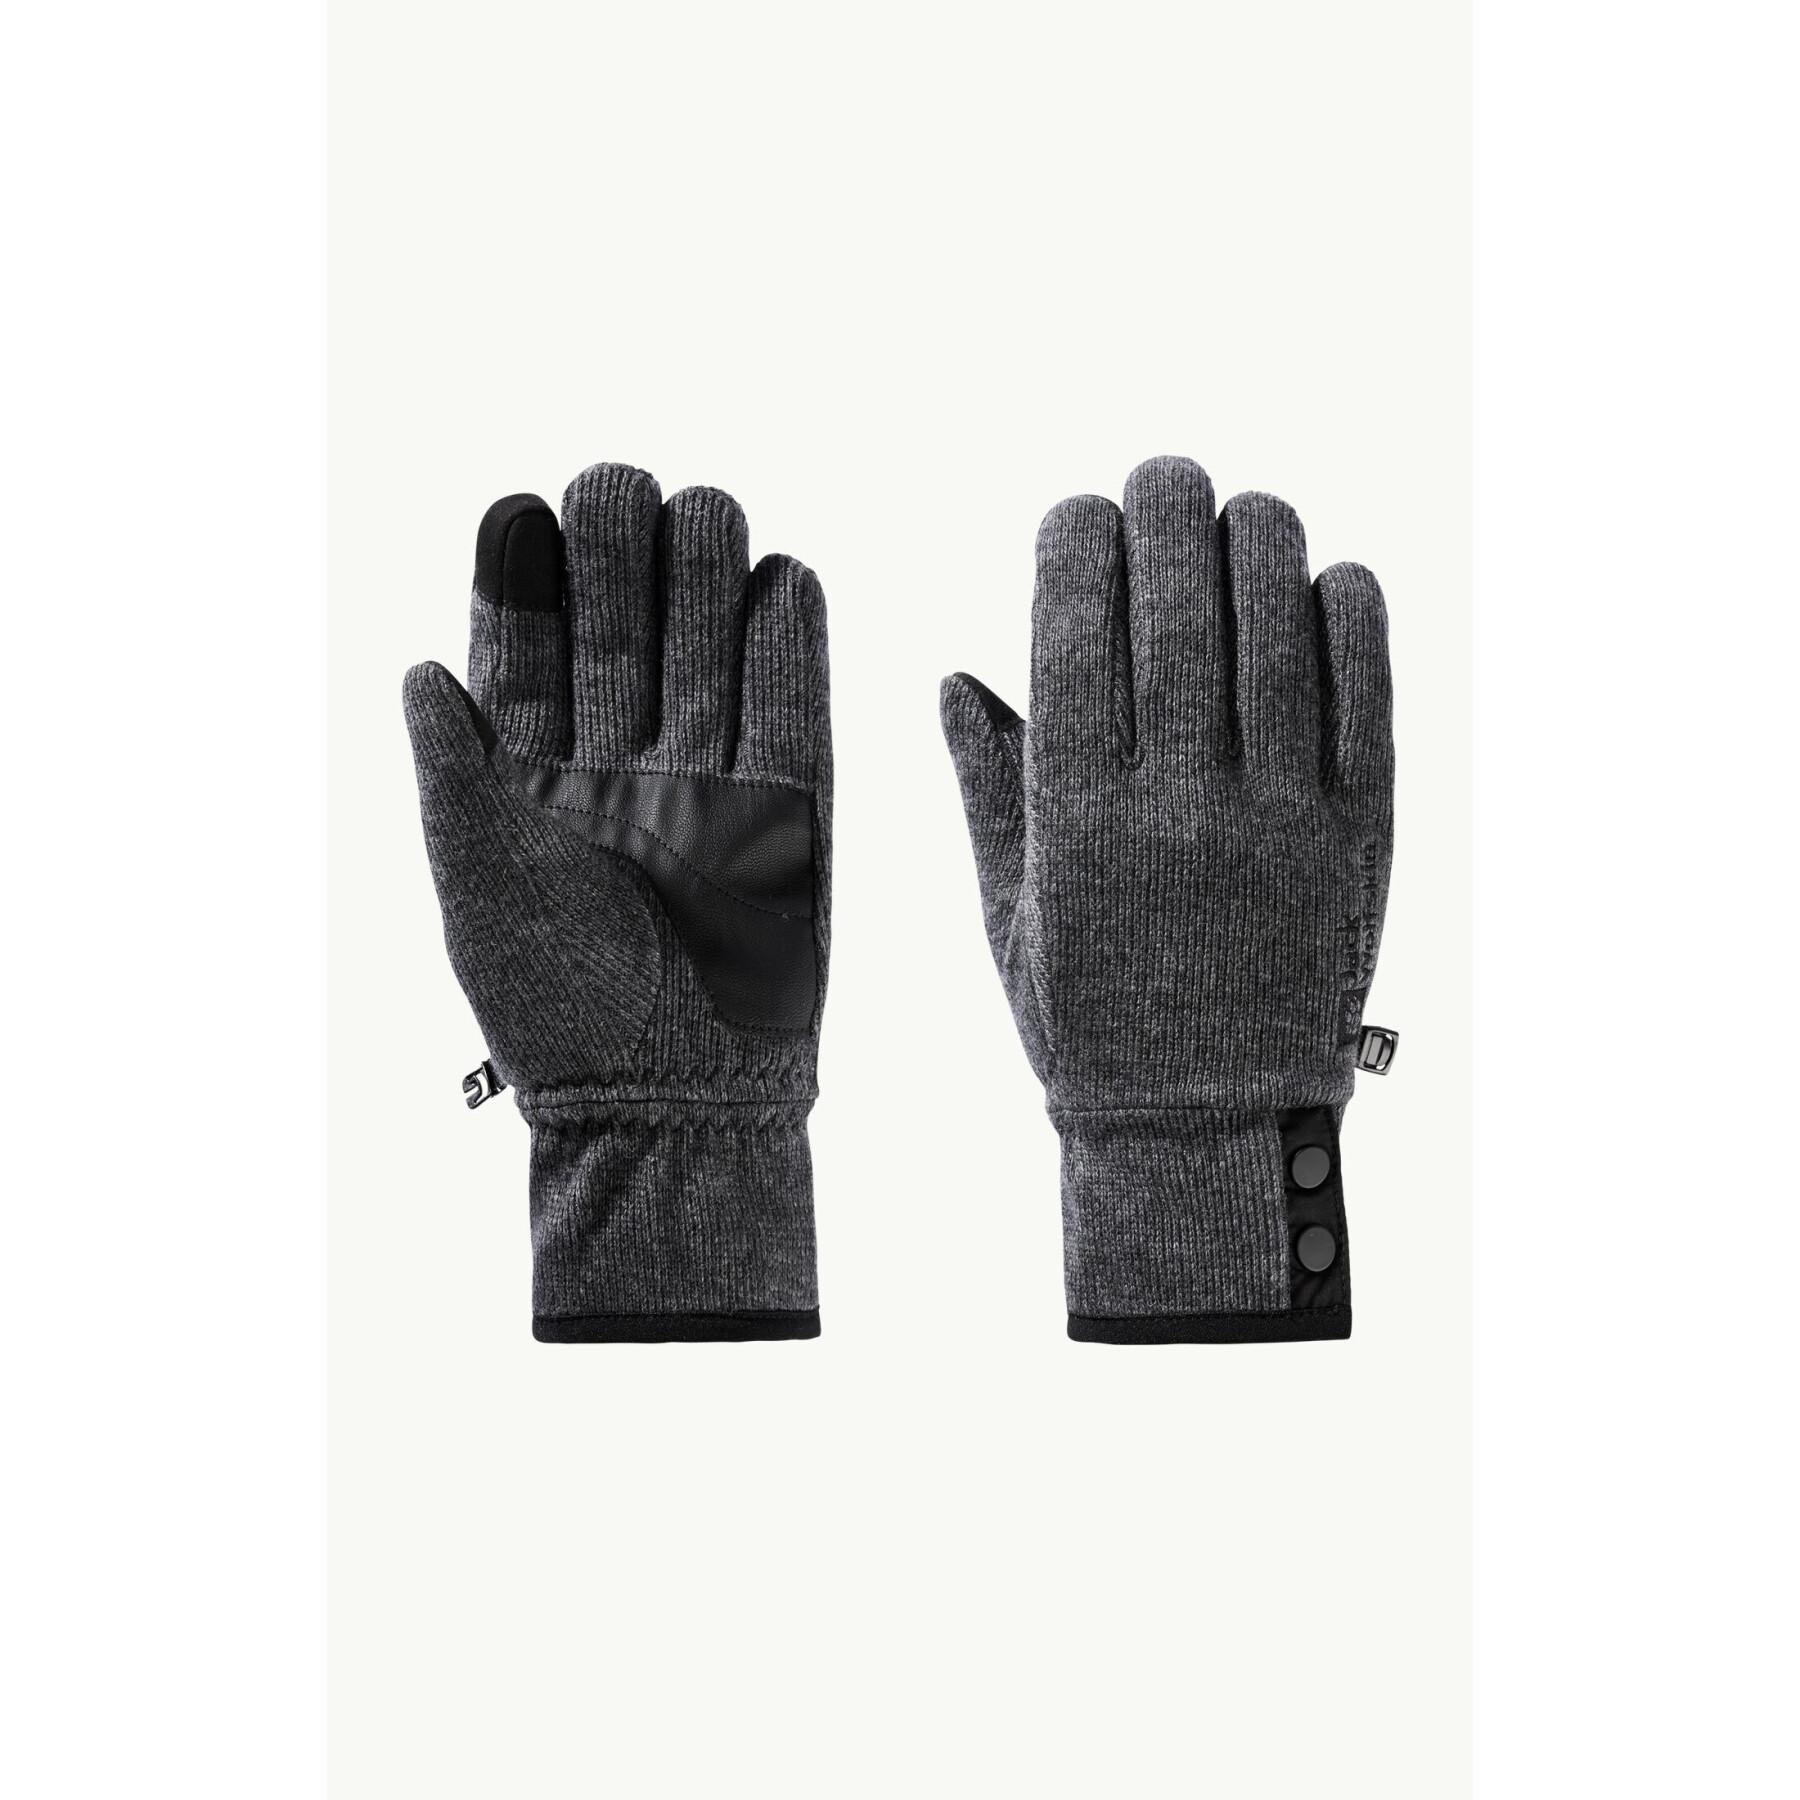 Wool winter gloves Jack Wolfskin Training - - Accessories Fitness Fitness 